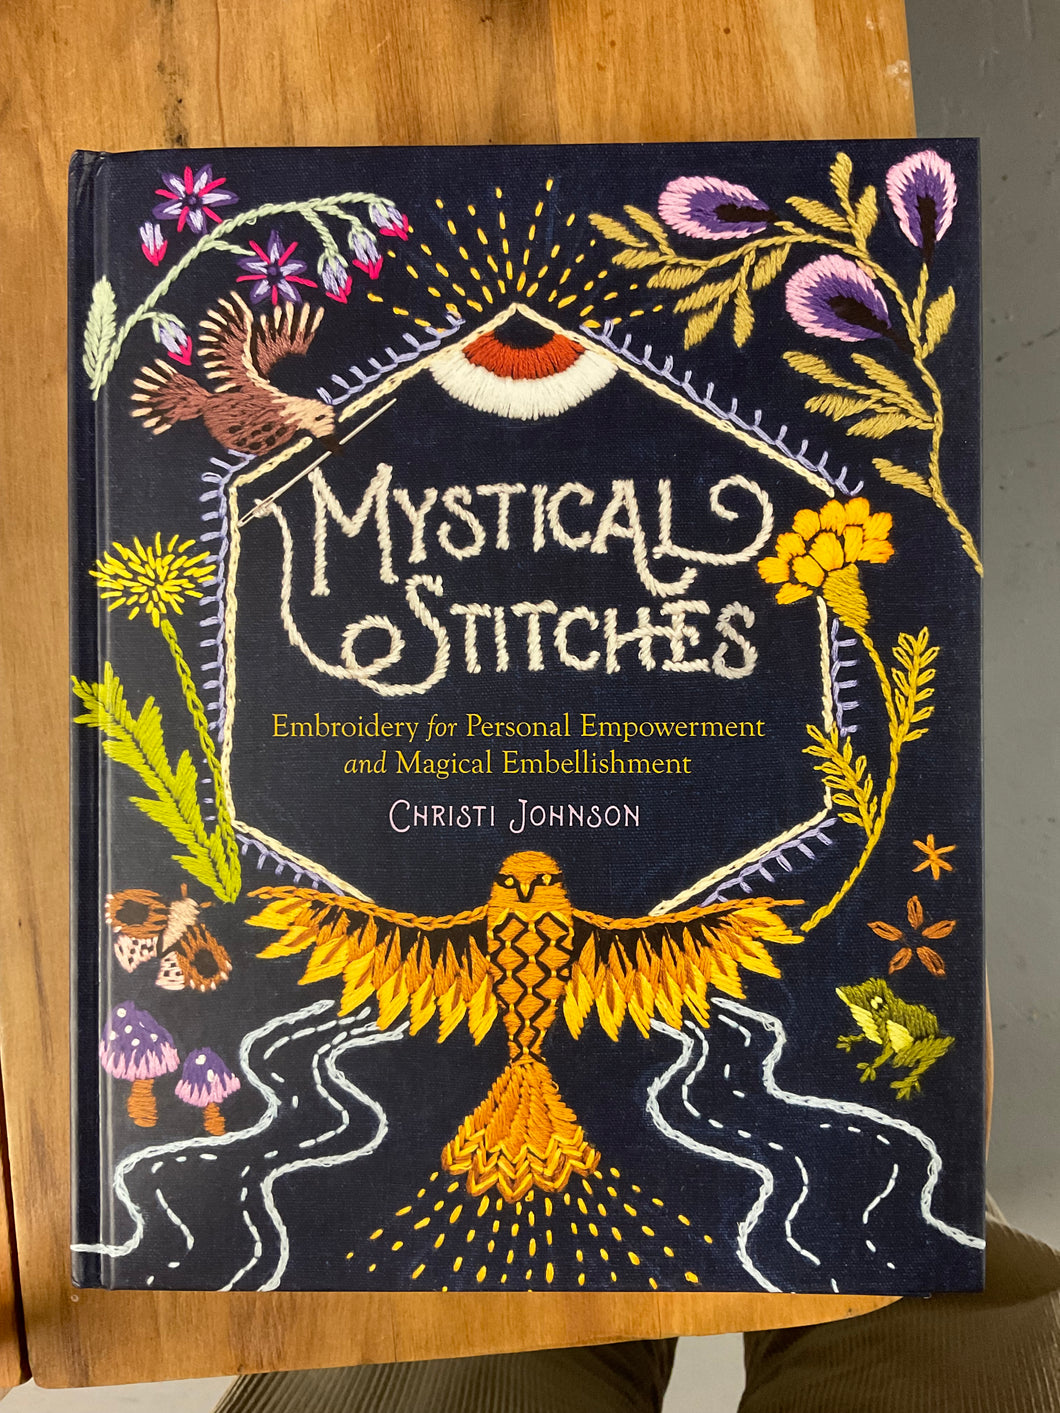 Mystical Stitches by Christi Johnson